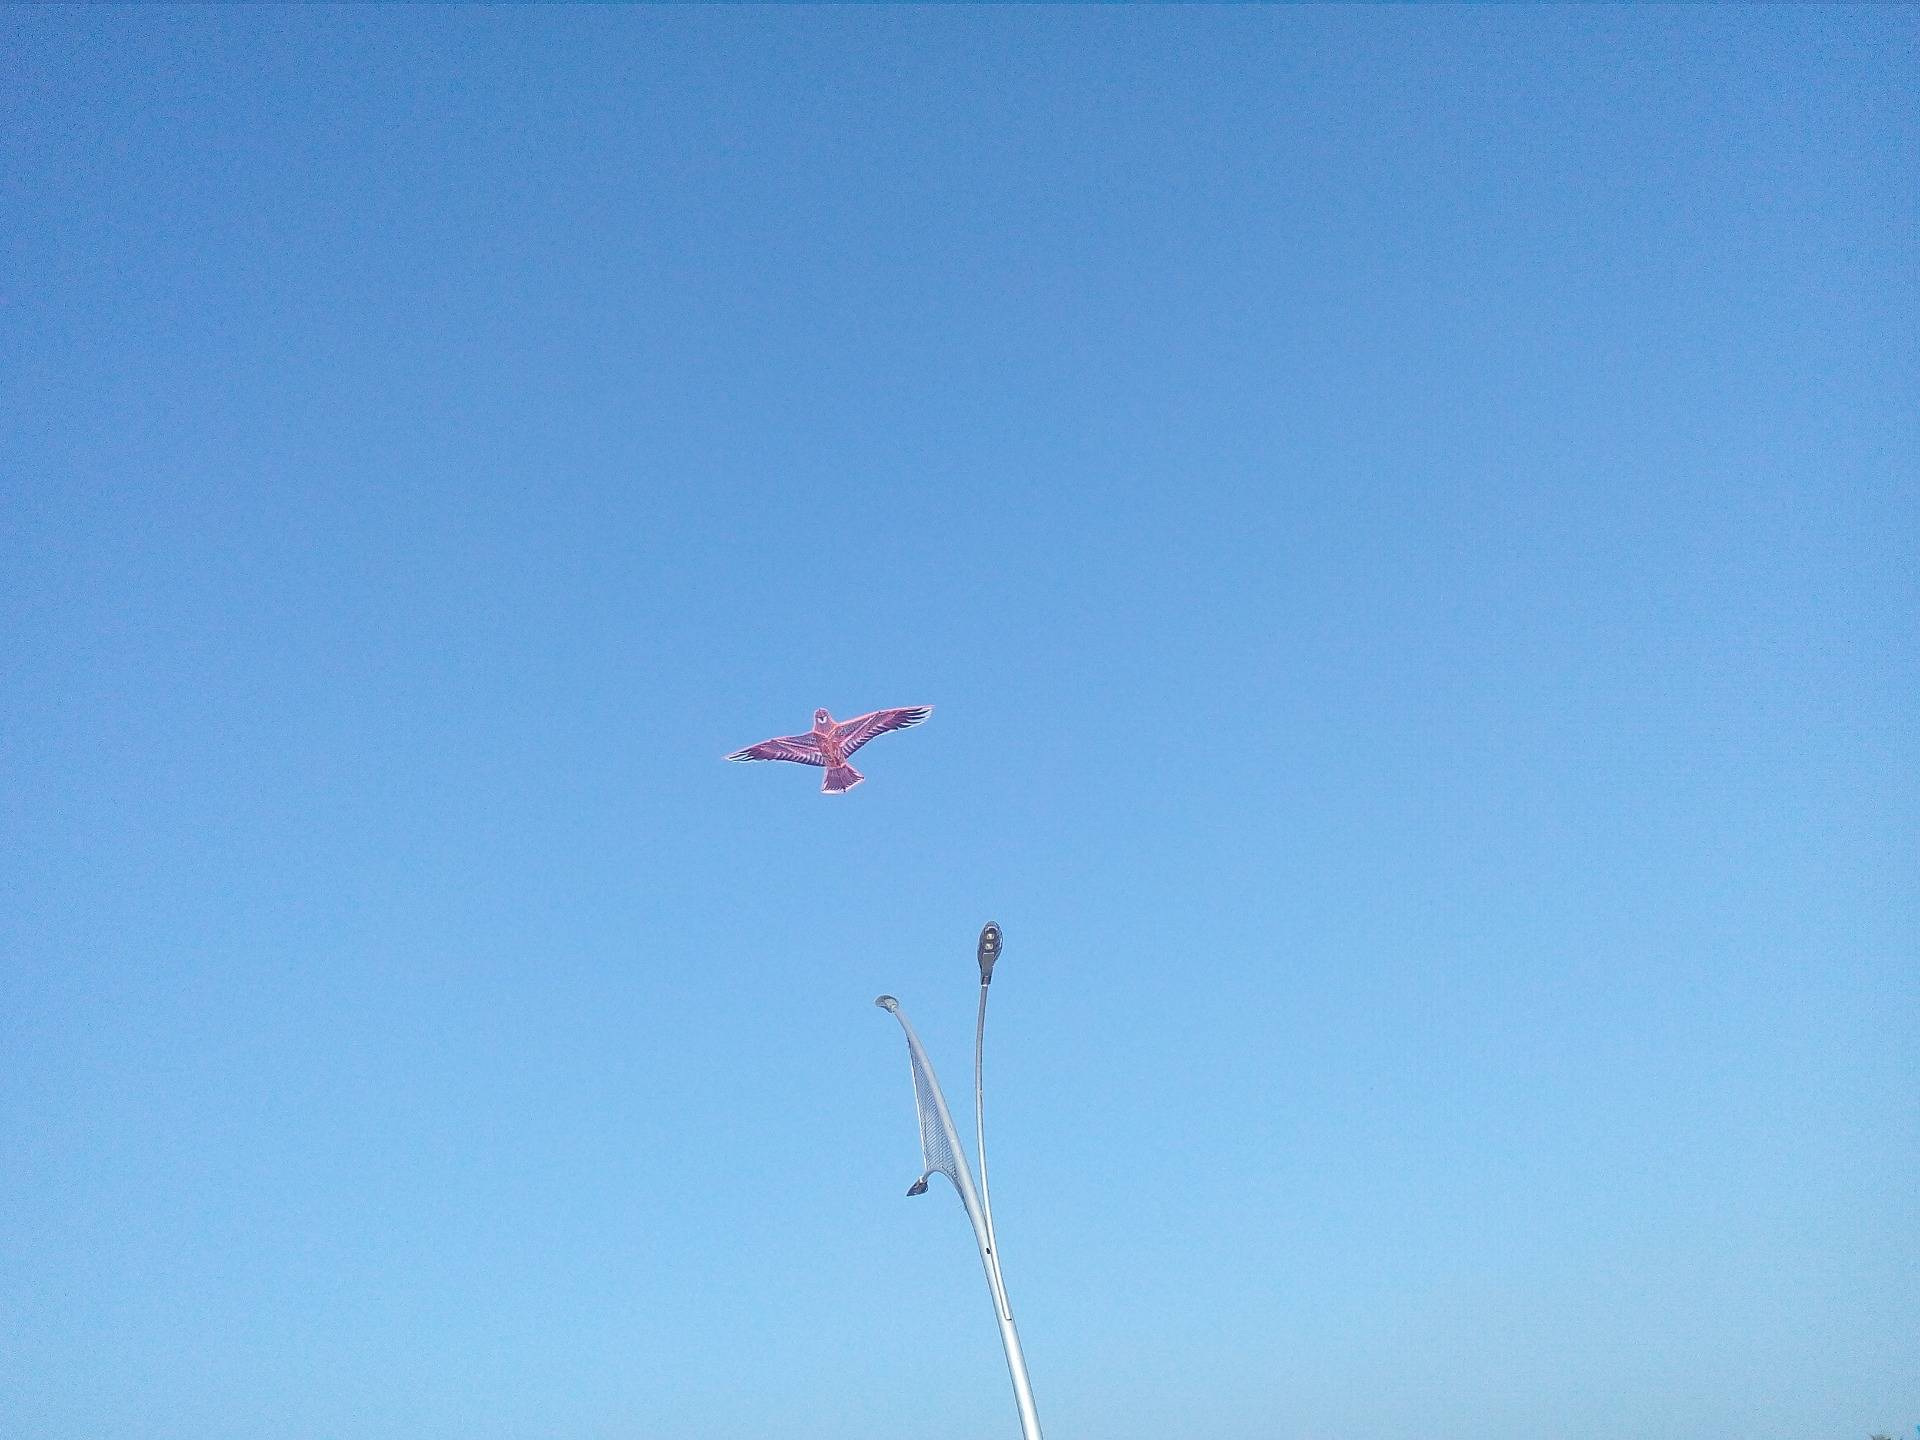 Nice to see flying kite